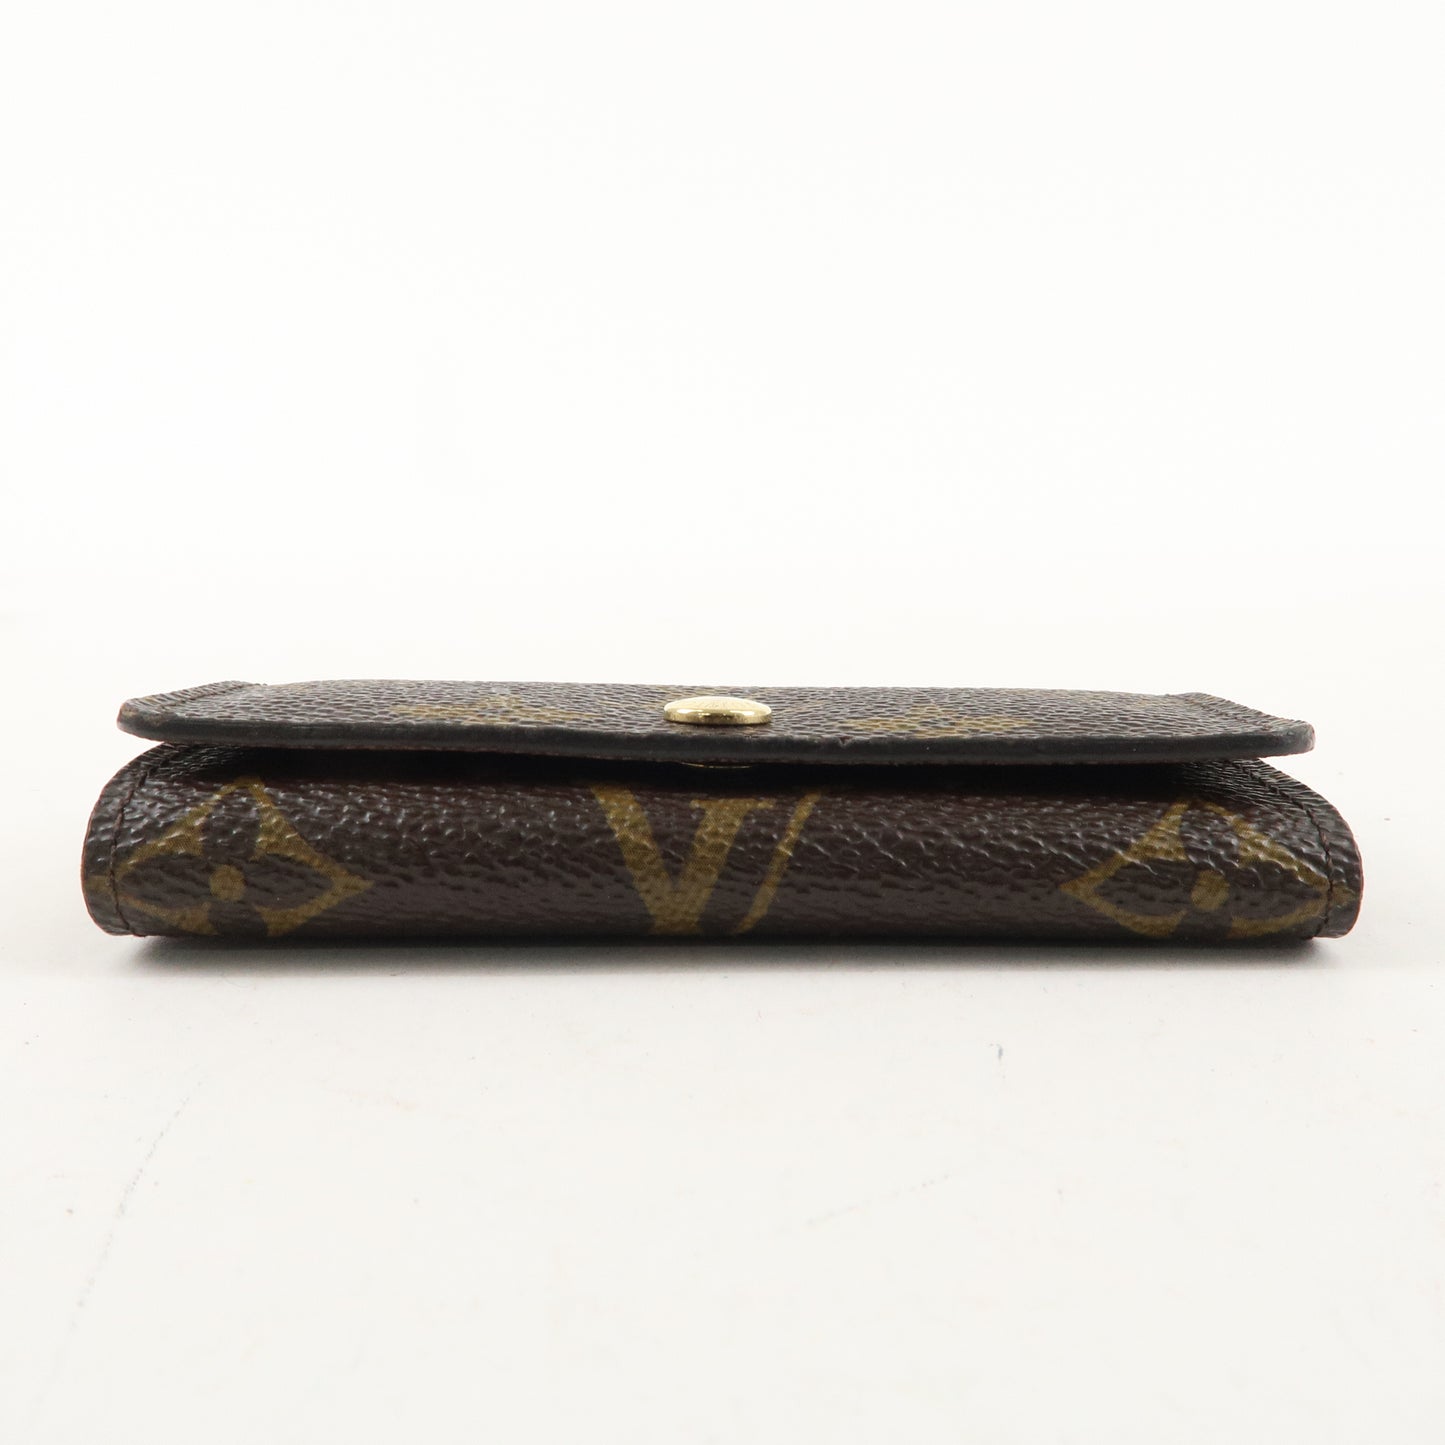 Louis Vuitton Monogram Multicles 4 Key Case Key Holder M62631